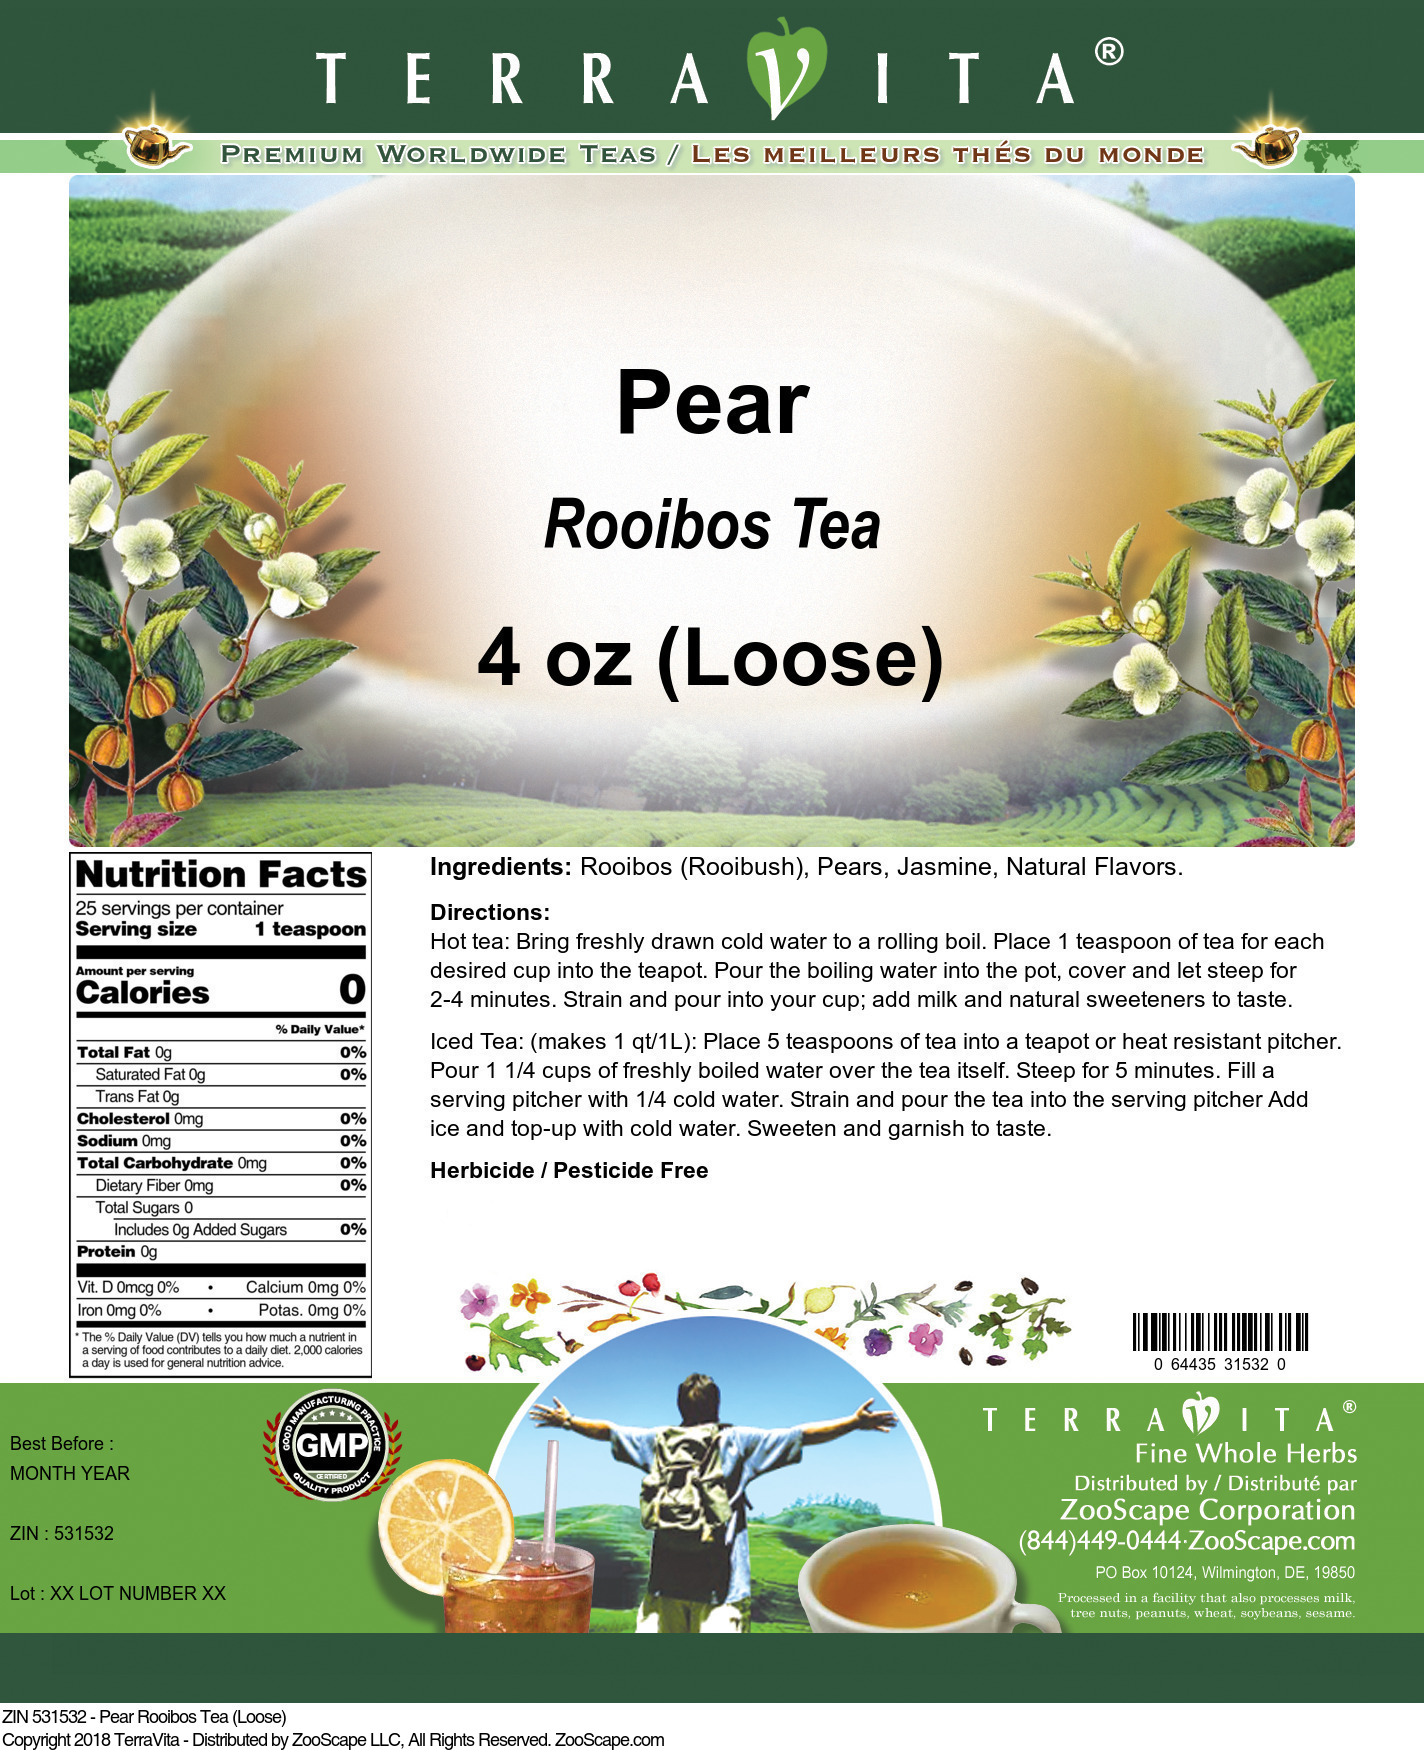 Pear Rooibos Tea (Loose) - Label